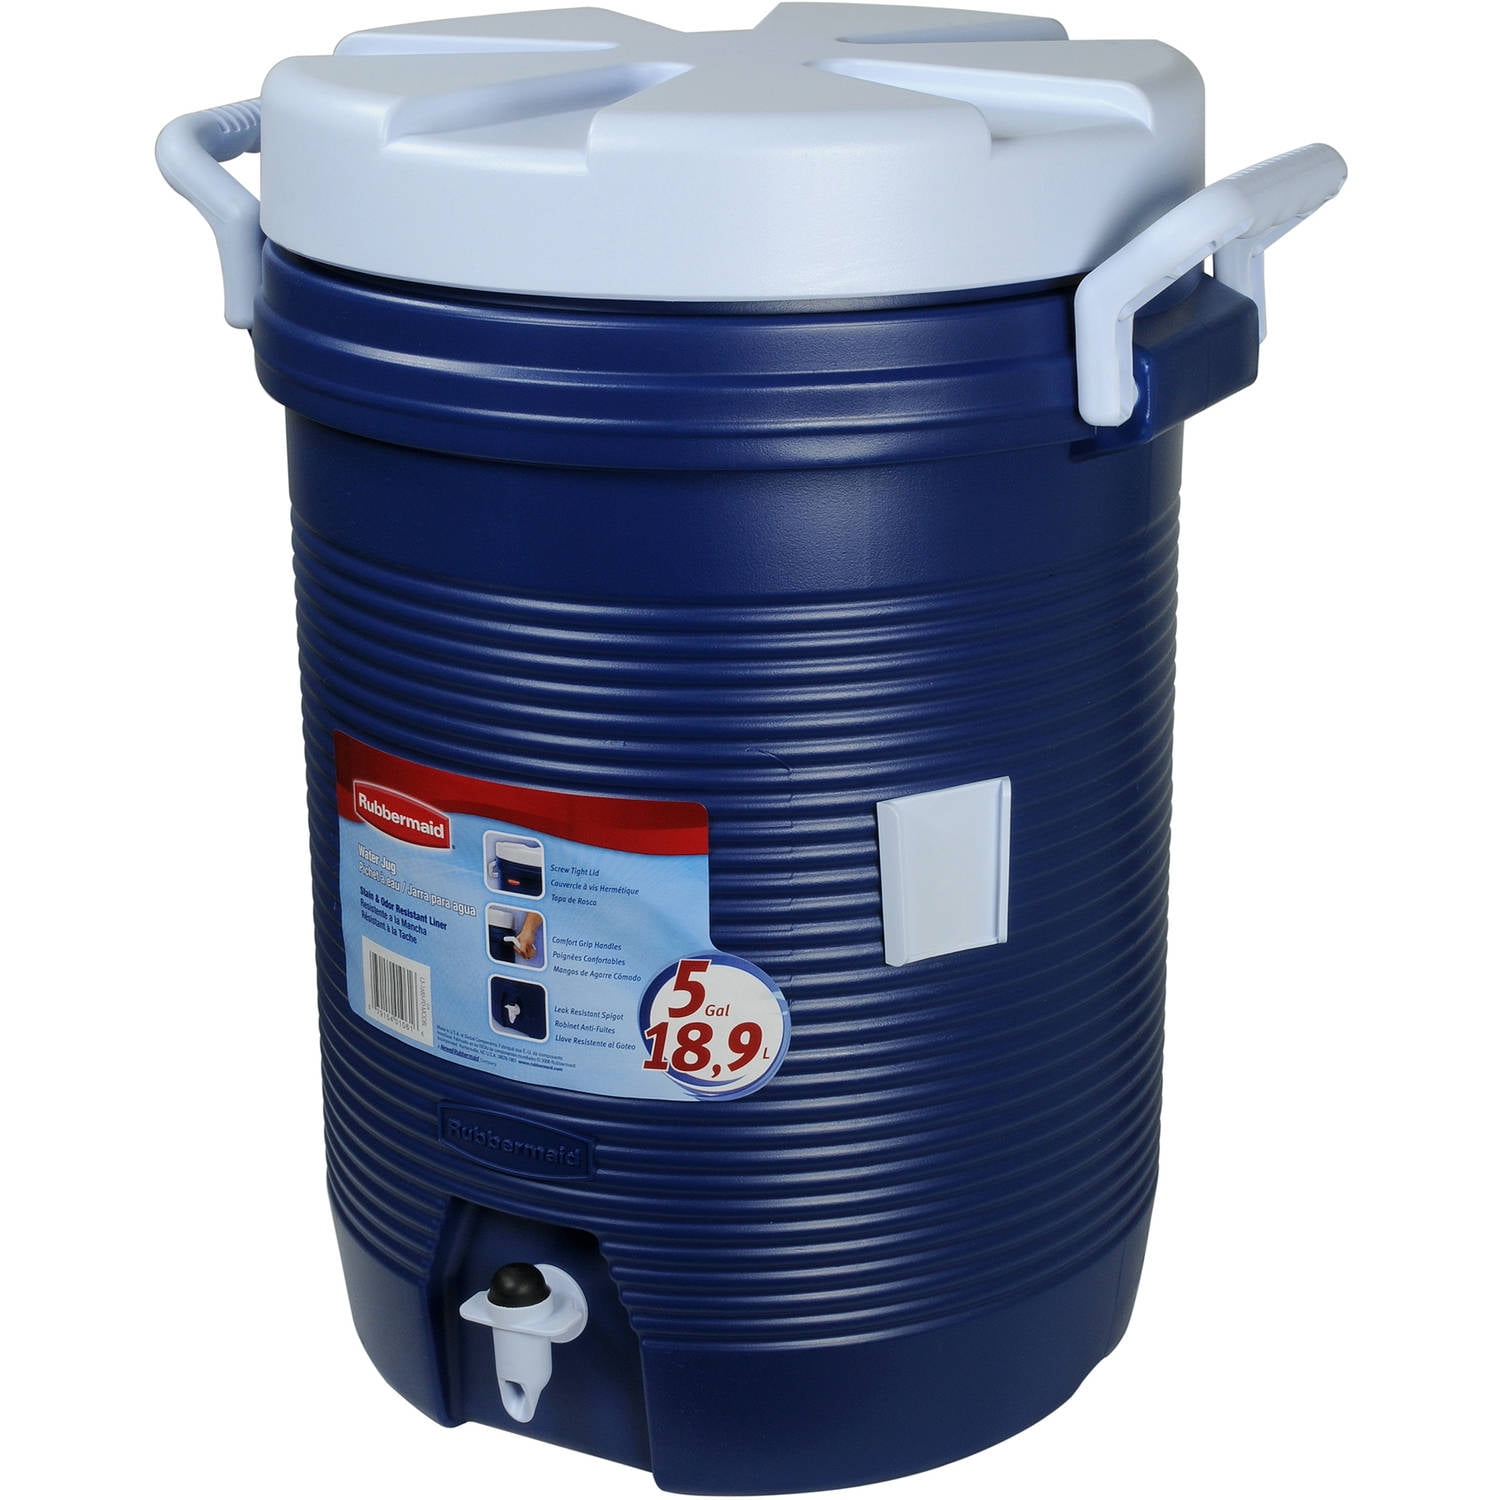 5 gallon rubbermaid cooler